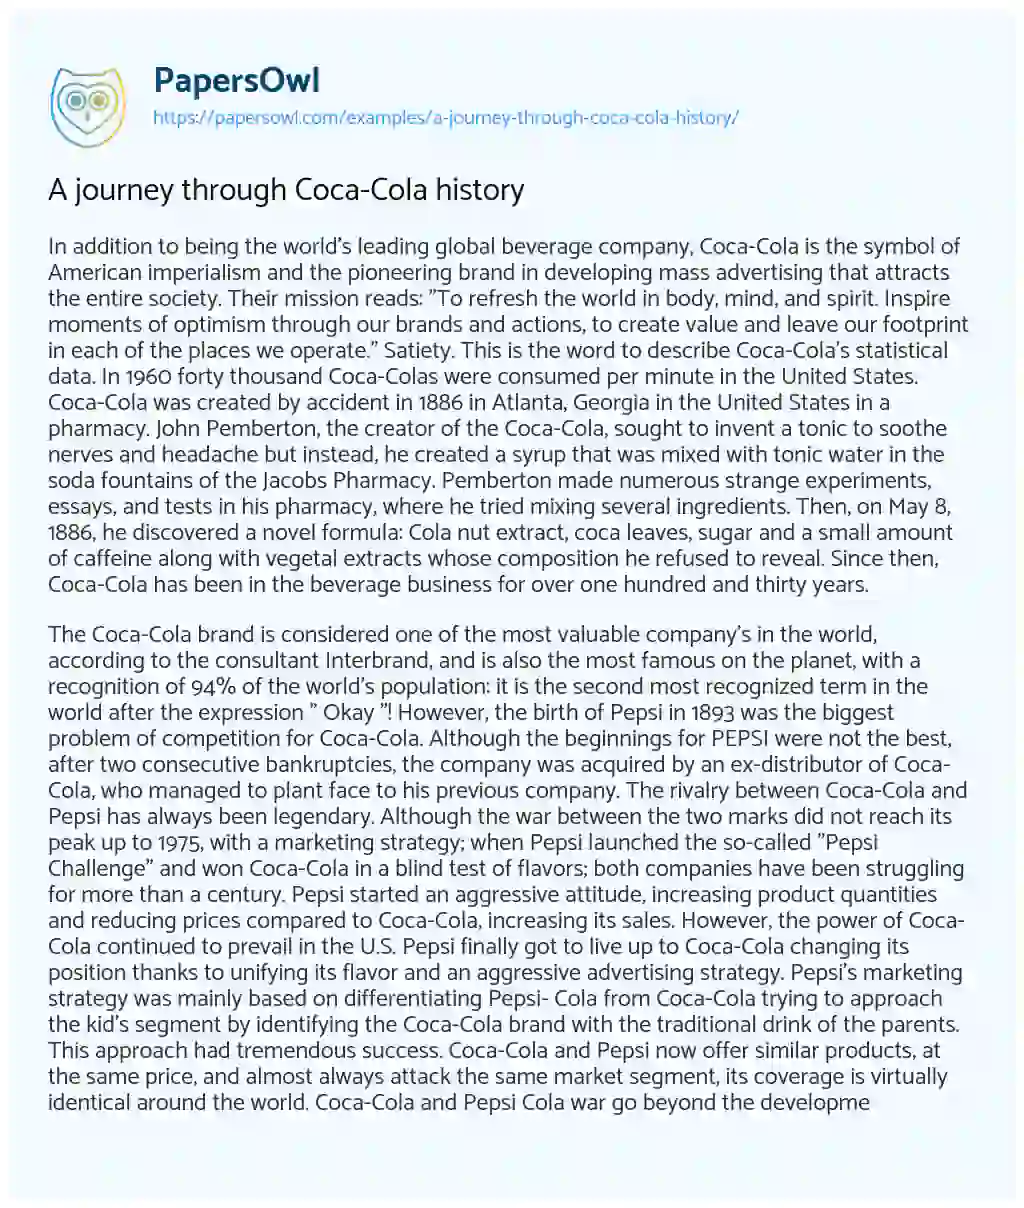 Essay on A Journey through Coca-Cola History